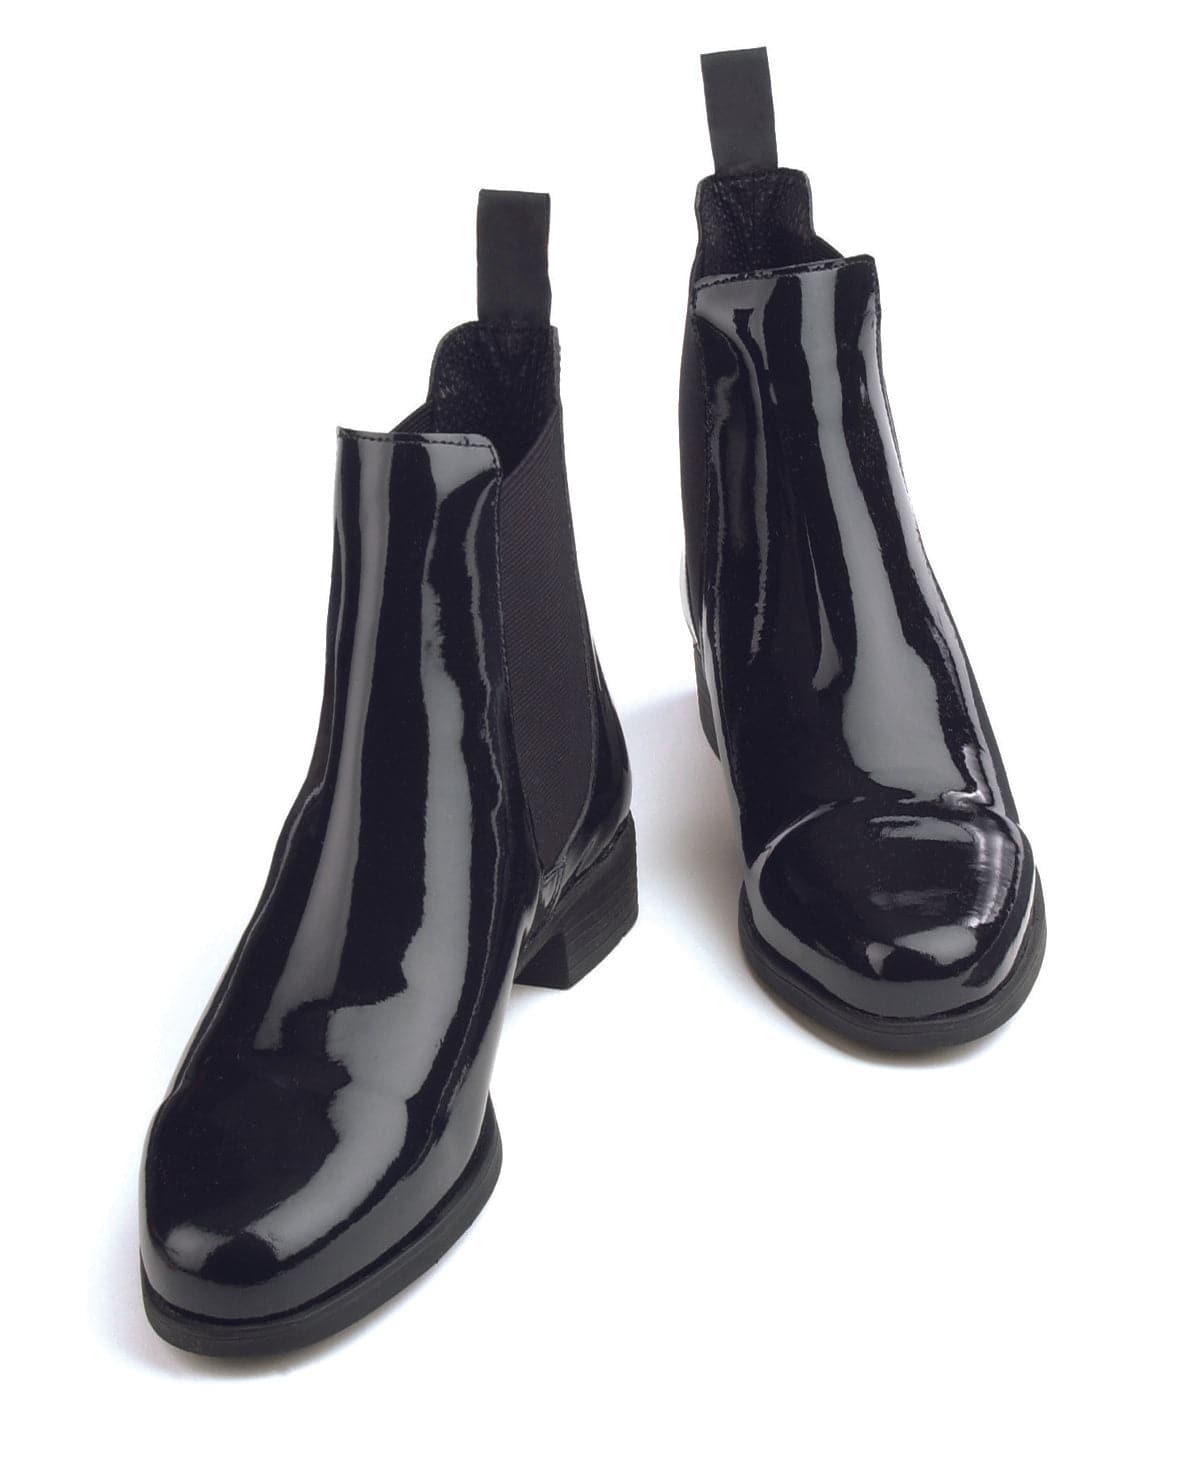 Ovation Finalist Elastic Side Patent Jod Boots - Ladies' - Equine Exchange Tack Shop